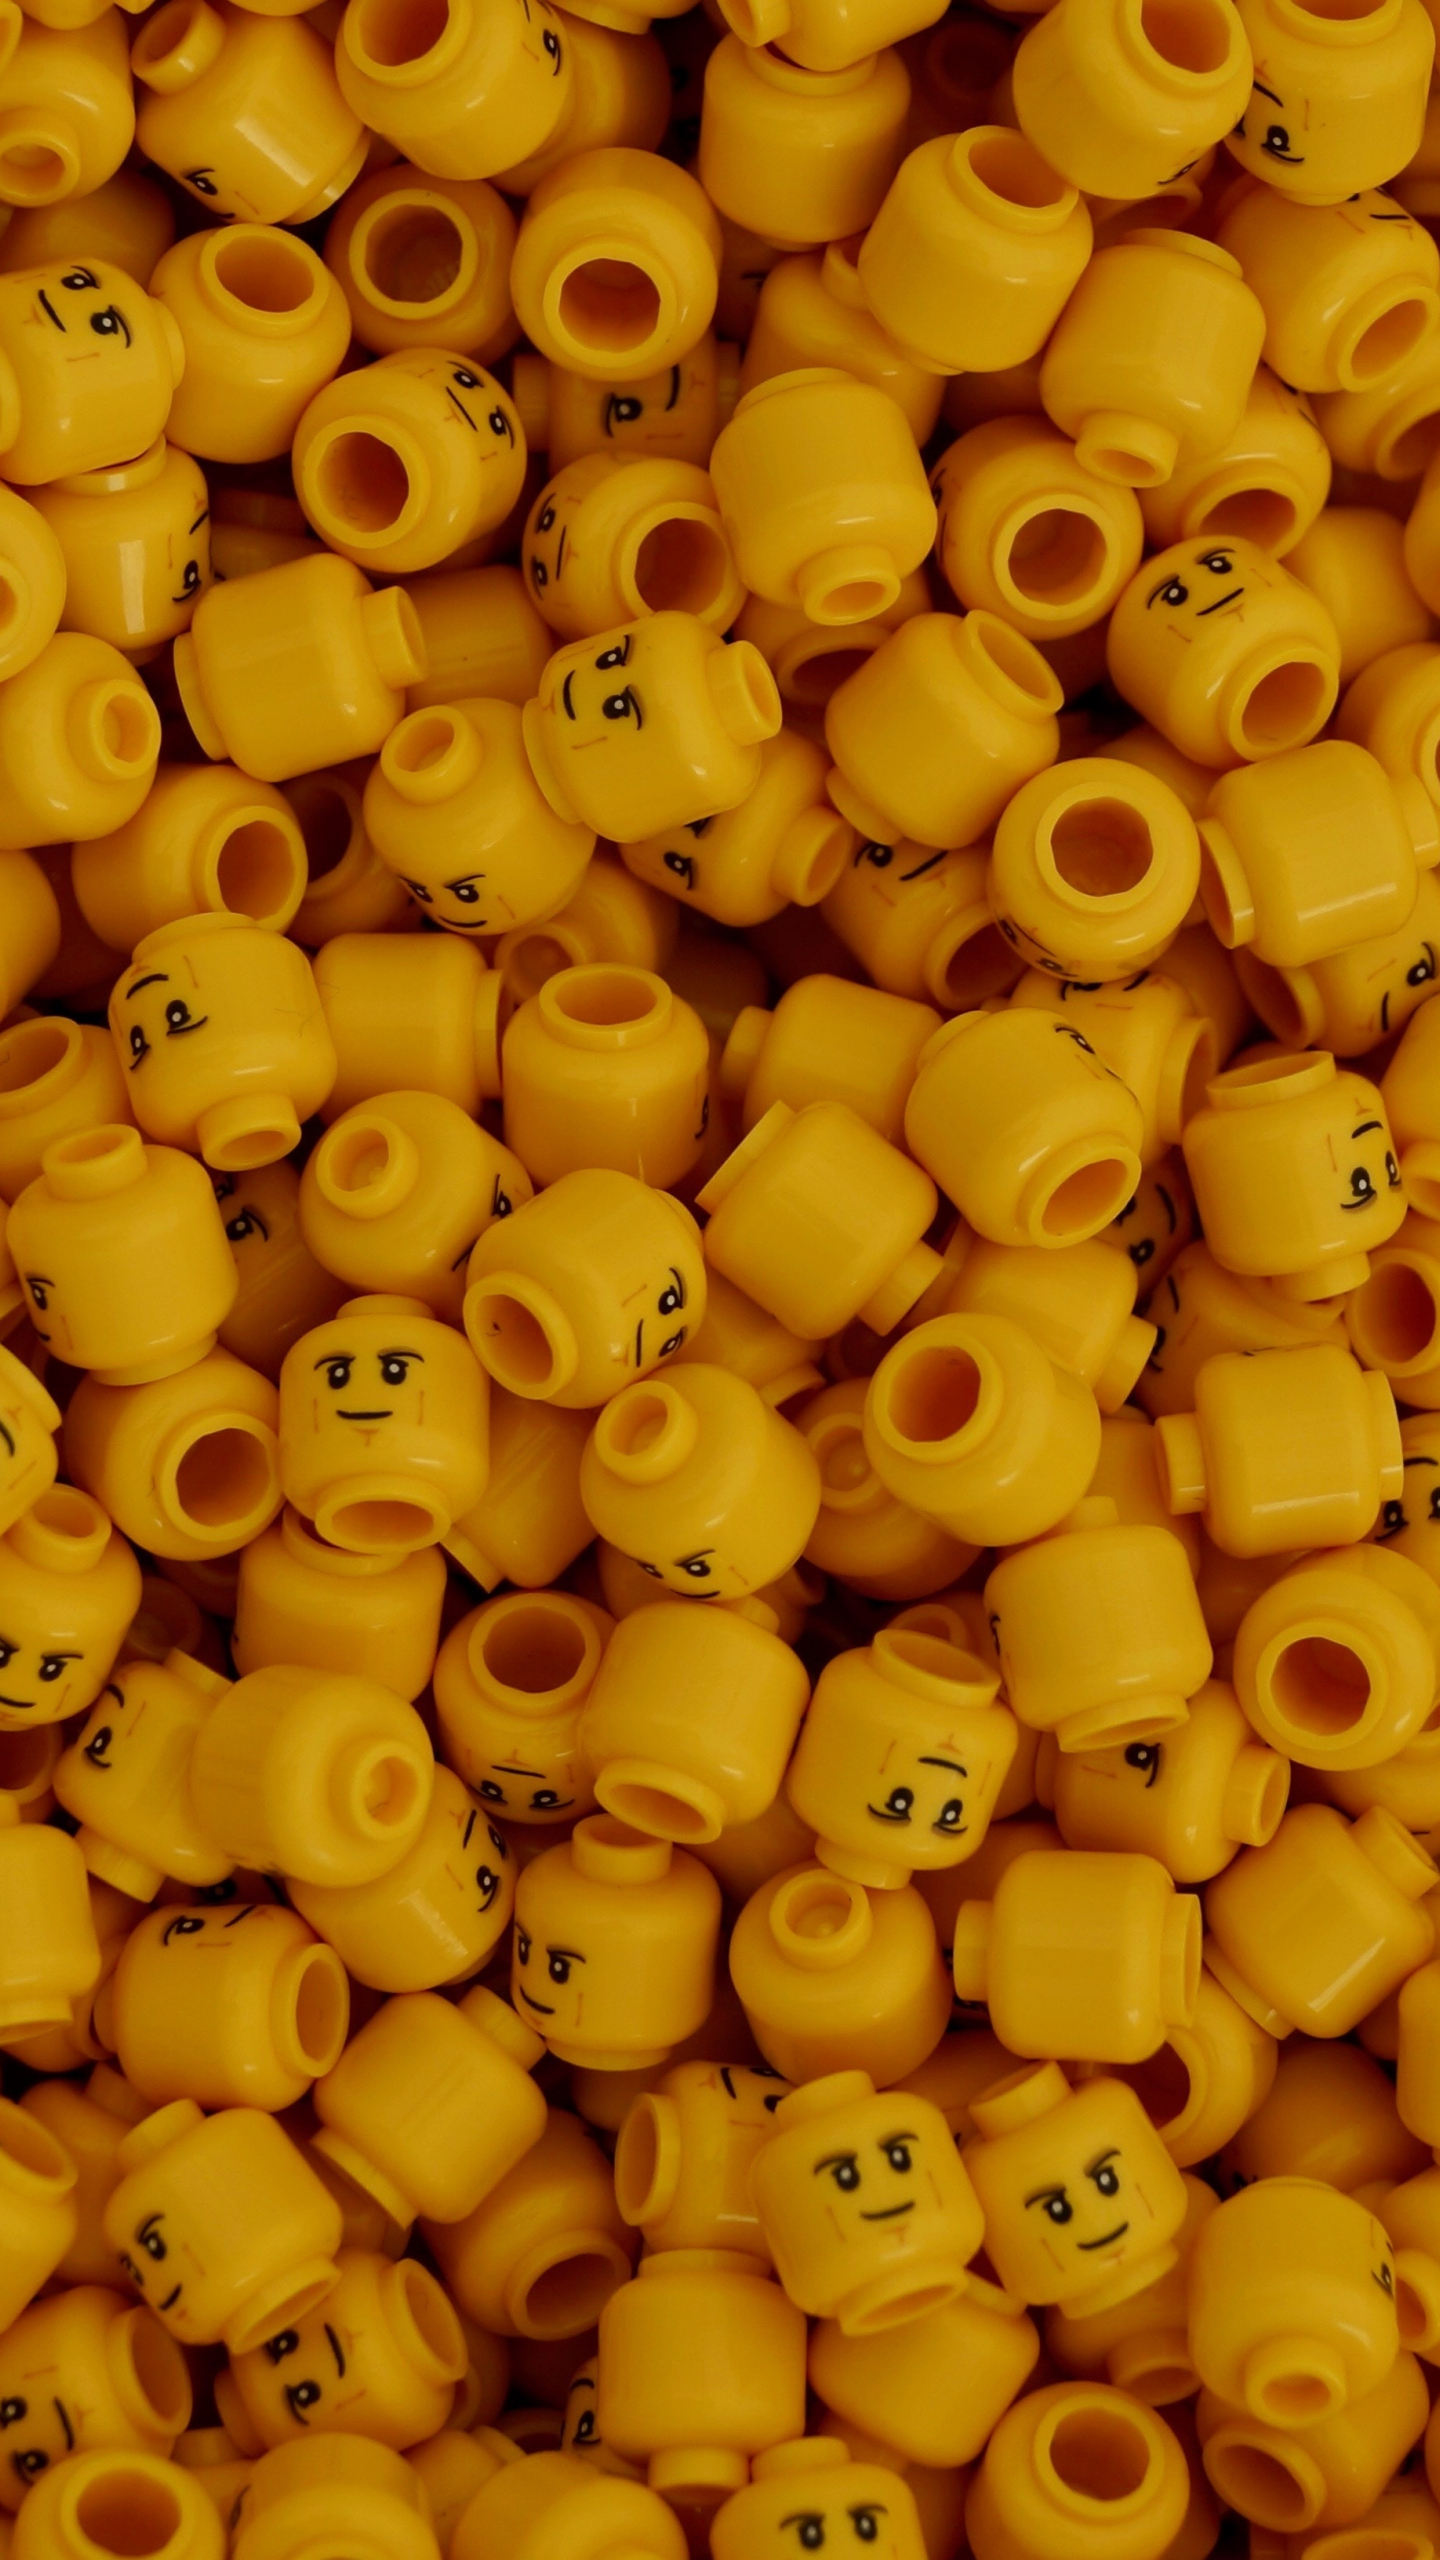 Yellow, Lego, toy, 1440x2560 wallpaper